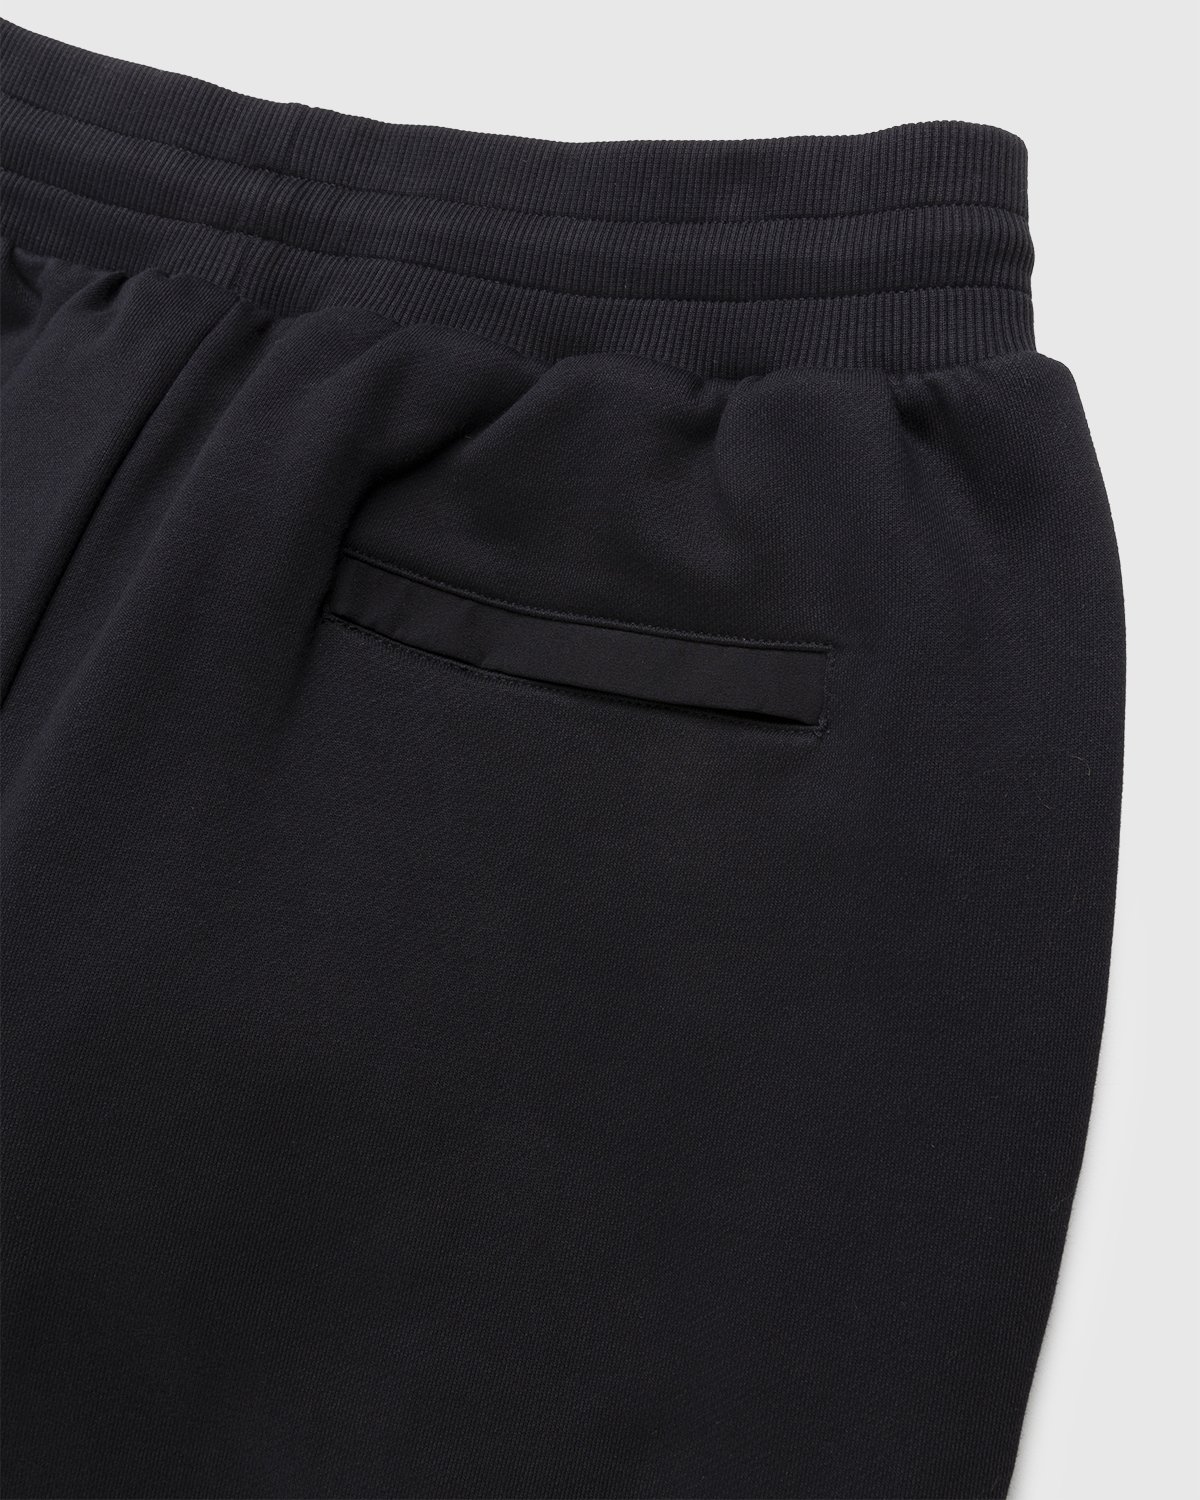 A-Cold-Wall* - Granular Sweatpants Black - Clothing - Black - Image 3